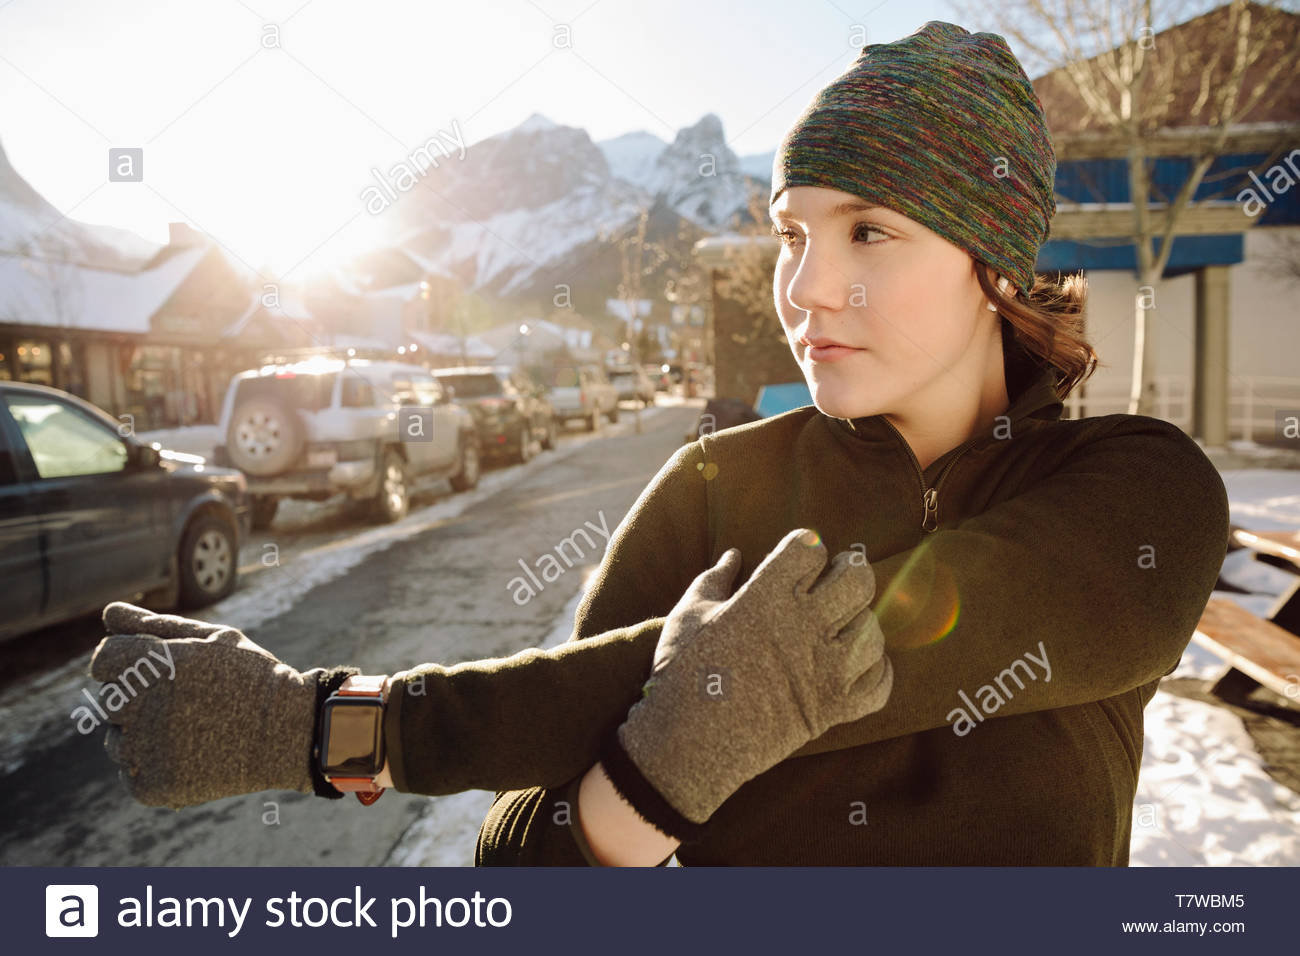 Teenage girl runner stretching arm on winter sidewalk Stock Photo